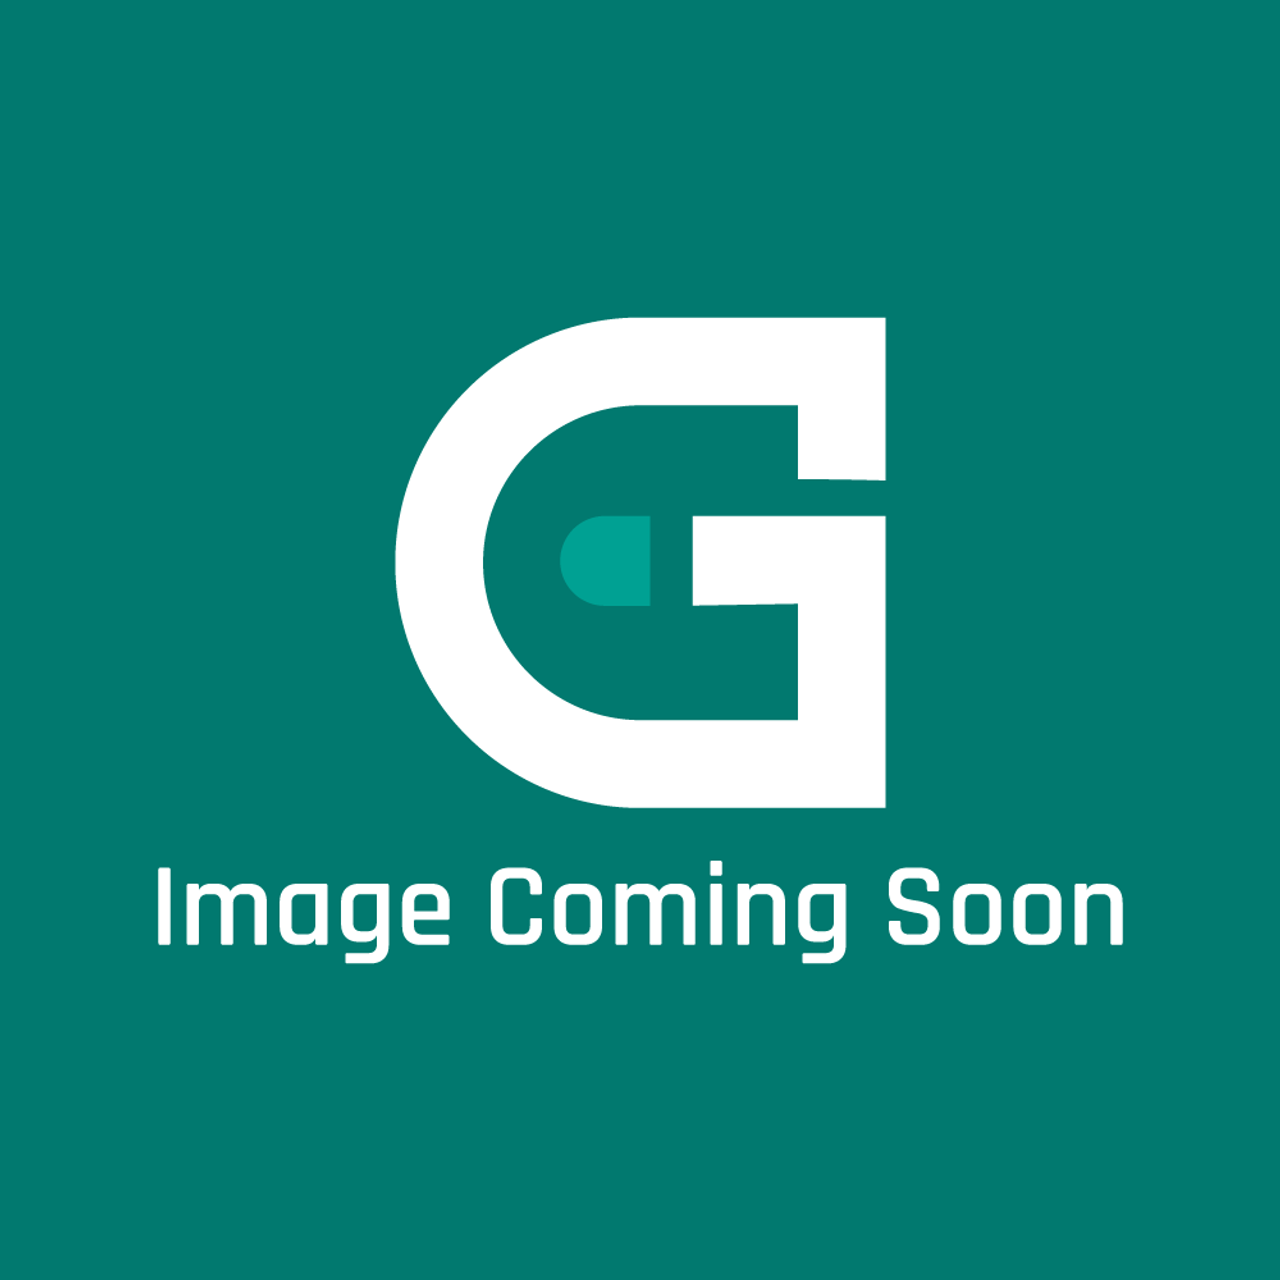 Frymaster 8100085 - Gasline Flx 1 X 48 #Ss16 100Bp - Image Coming Soon!